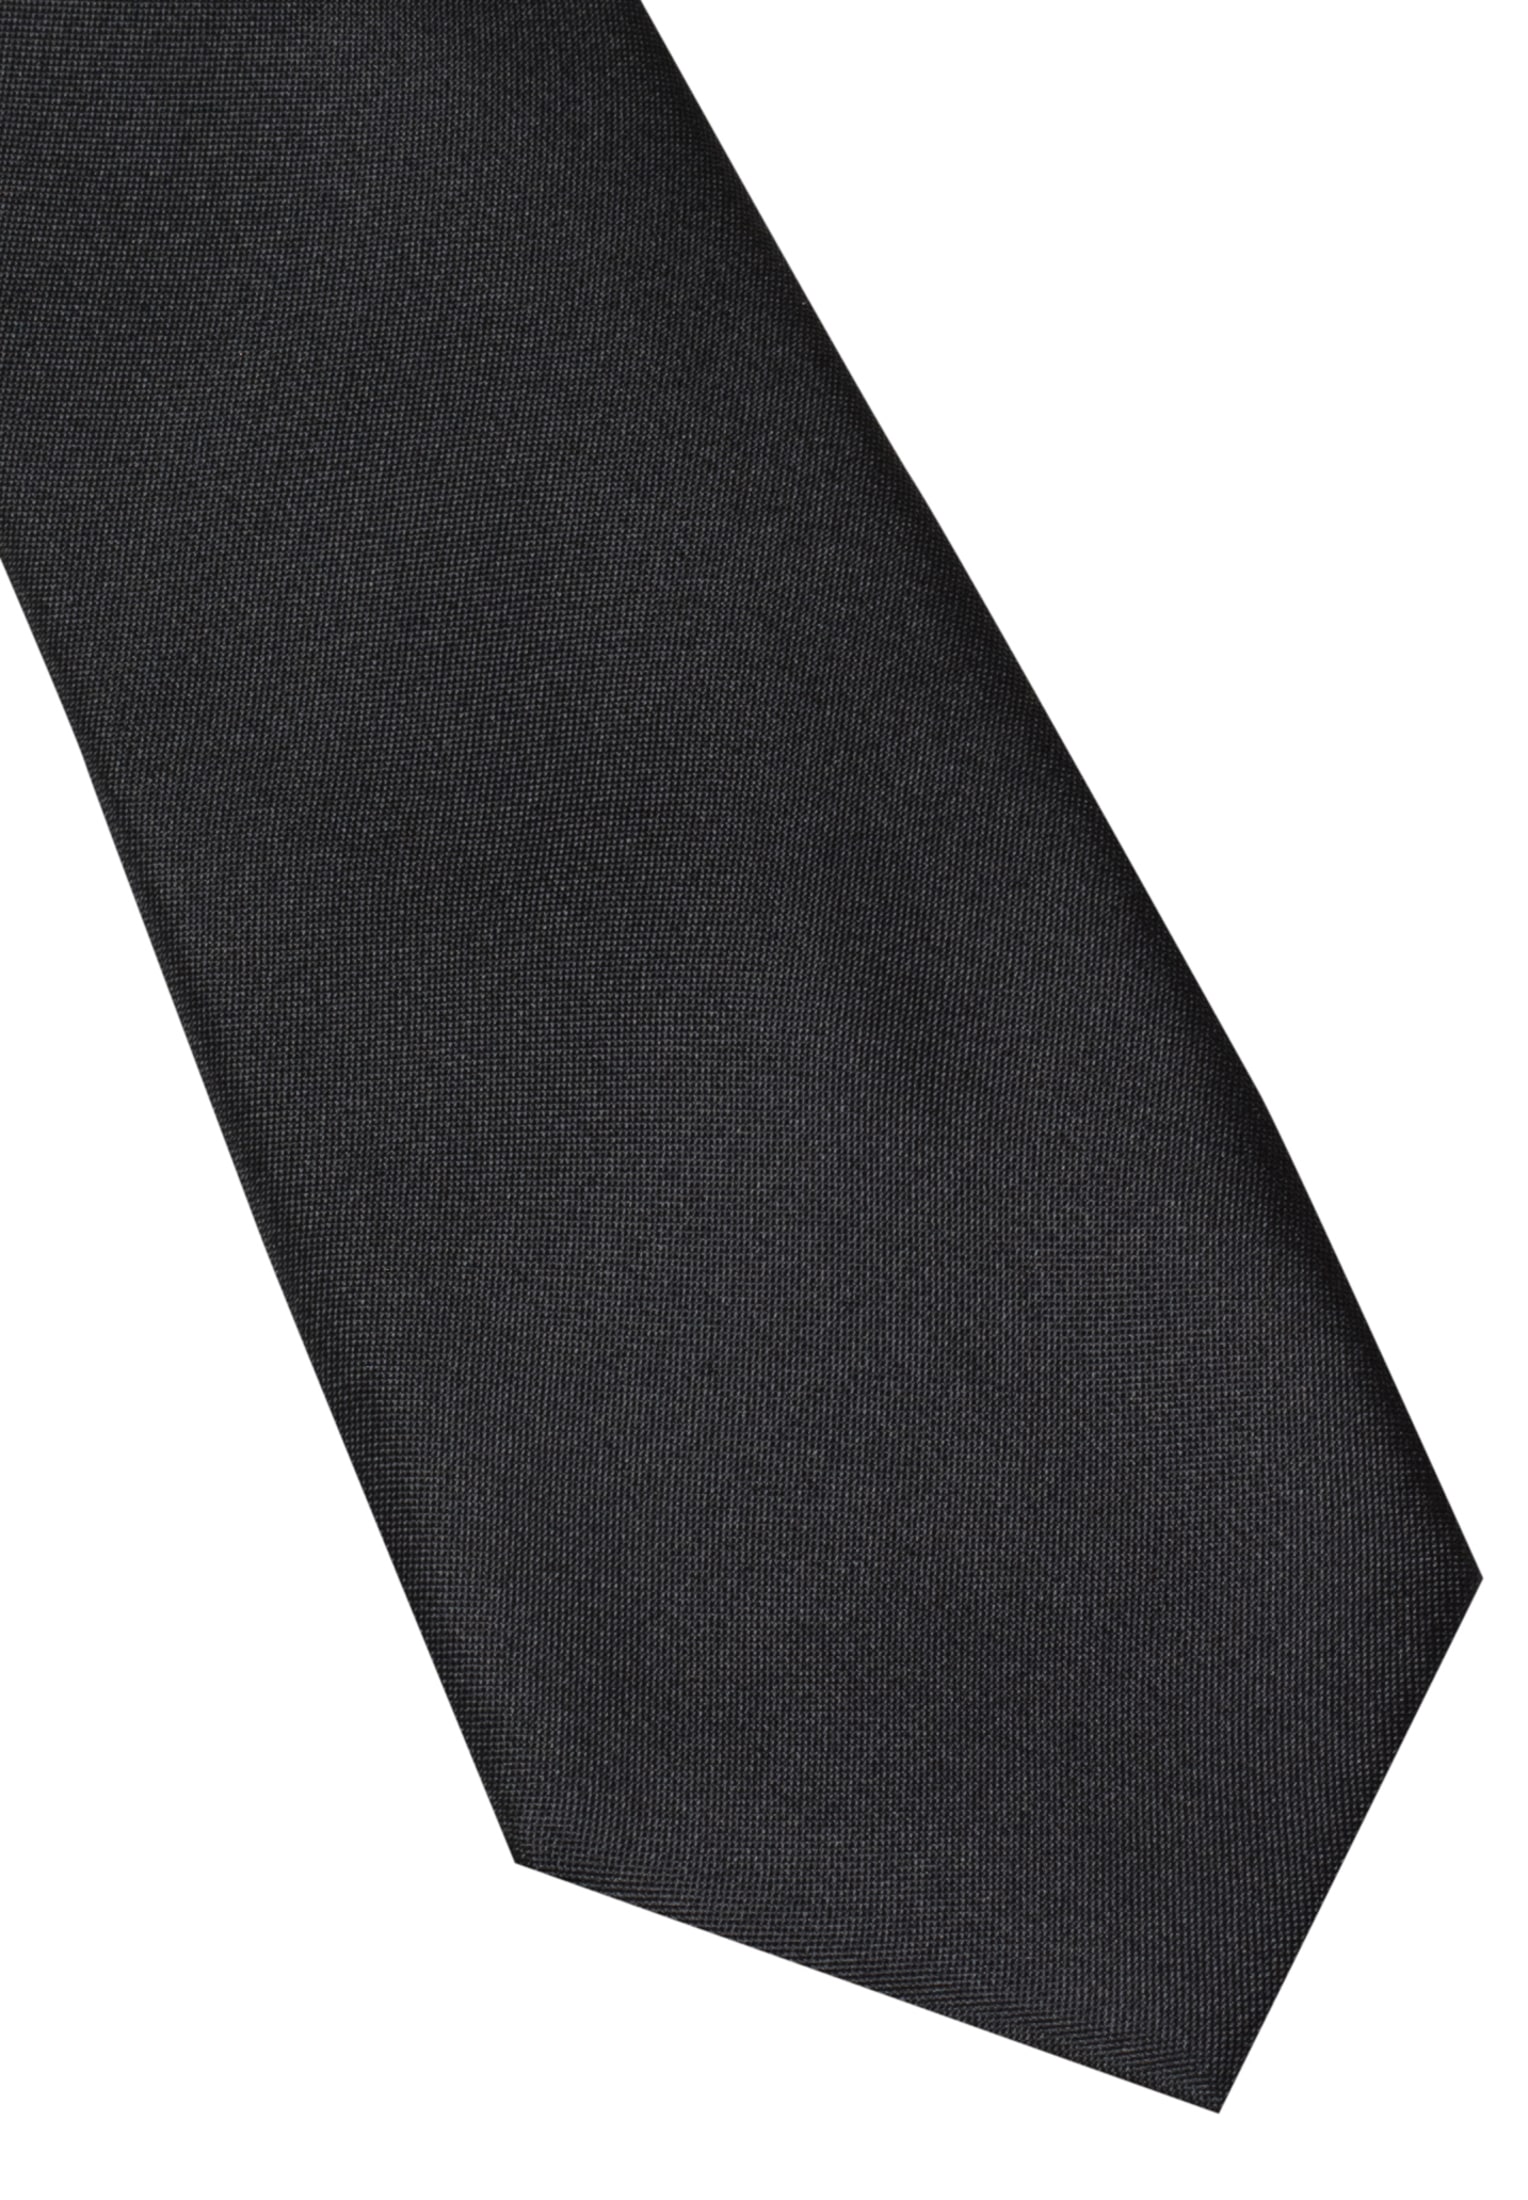 | in | Krawatte silber unifarben | 142 1AC00025-03-11-142 silber